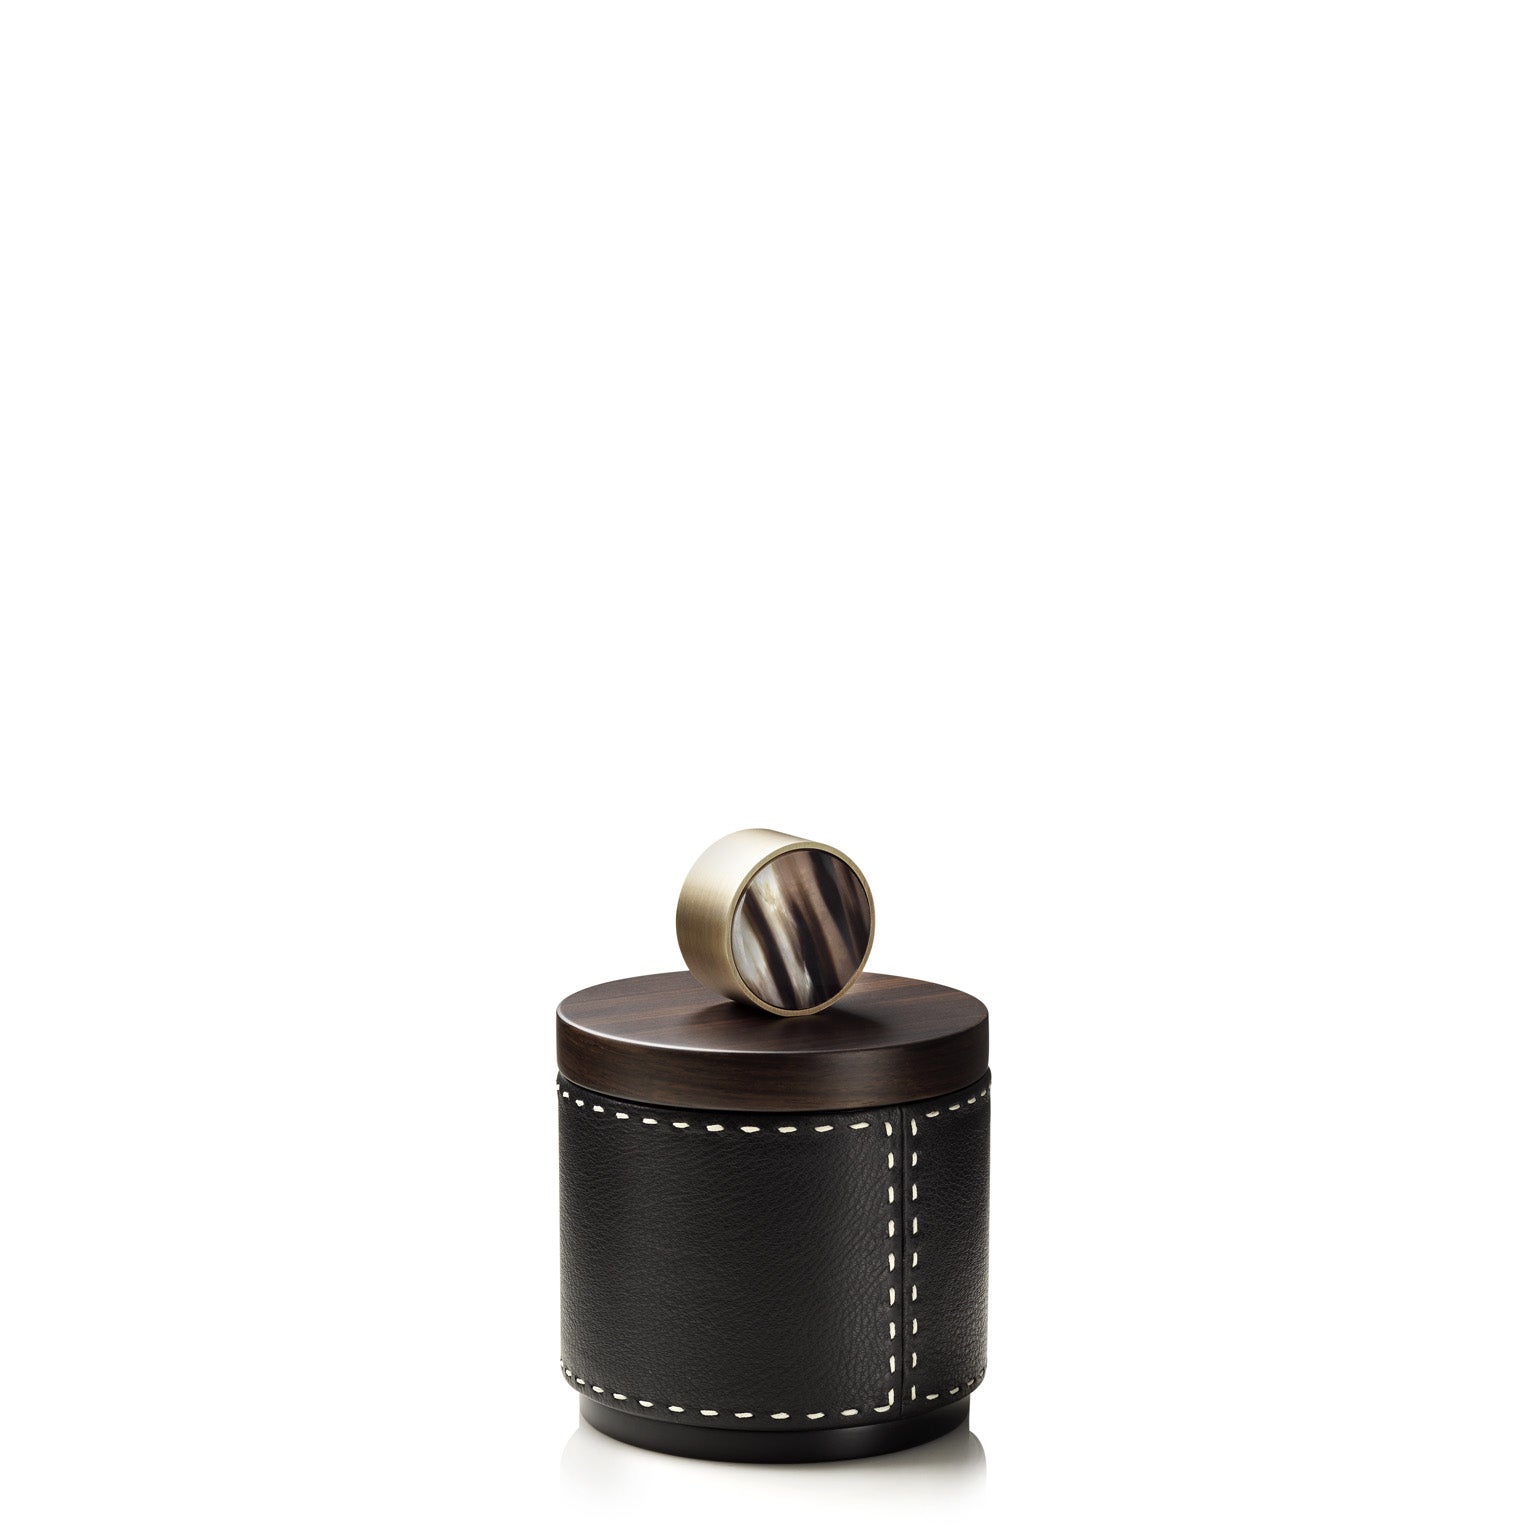 Agneta Round Box in Pebbled Leather with Handle in Corno Italiano, Mod. 4485